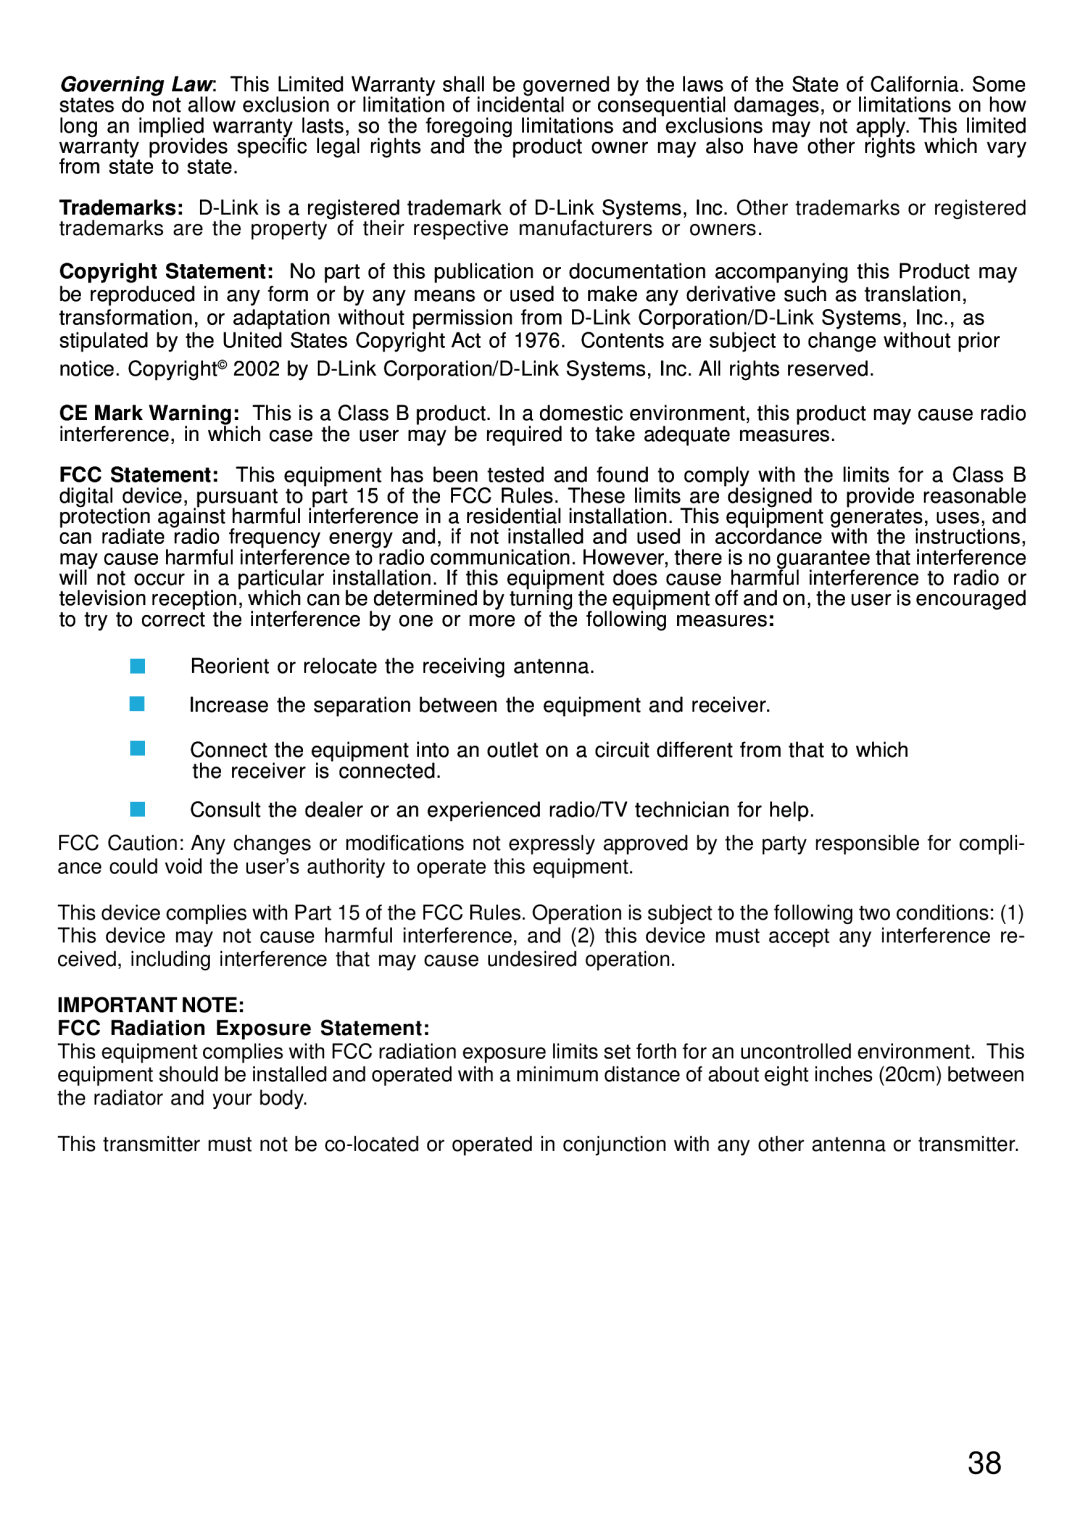 D-Link DCM-202 manual IMPORTANT NOTE FCC Radiation Exposure Statement 